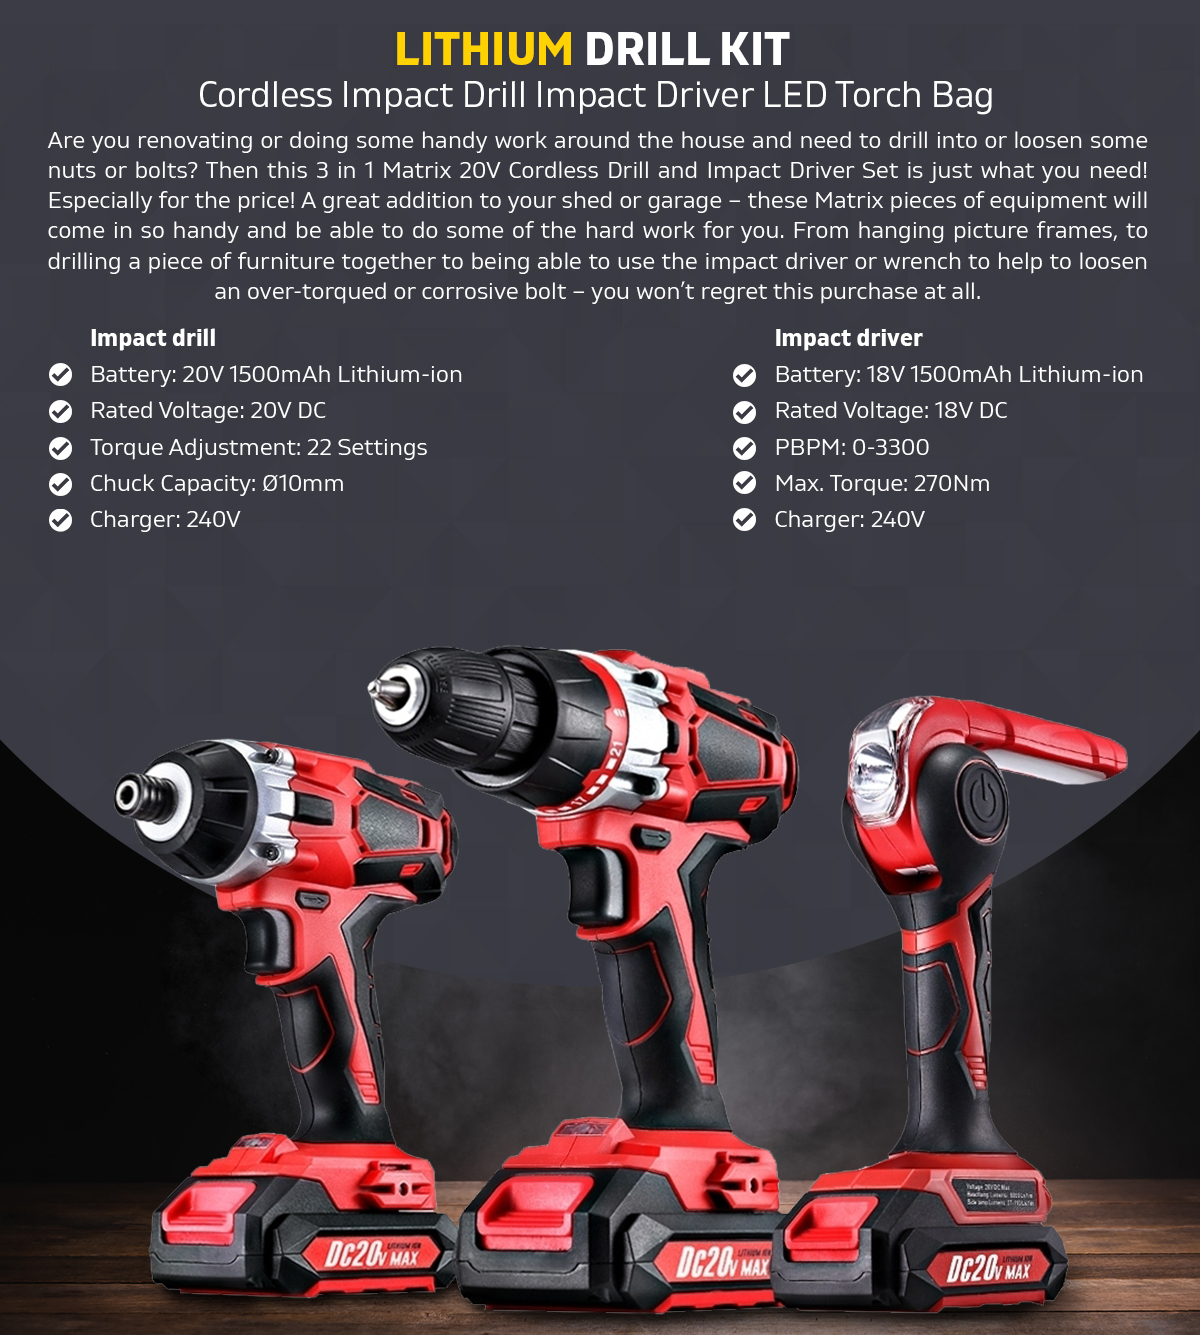 Drill Kit Cordless 20V Impact Drill Impact Driver Lithium LED Torch Bag